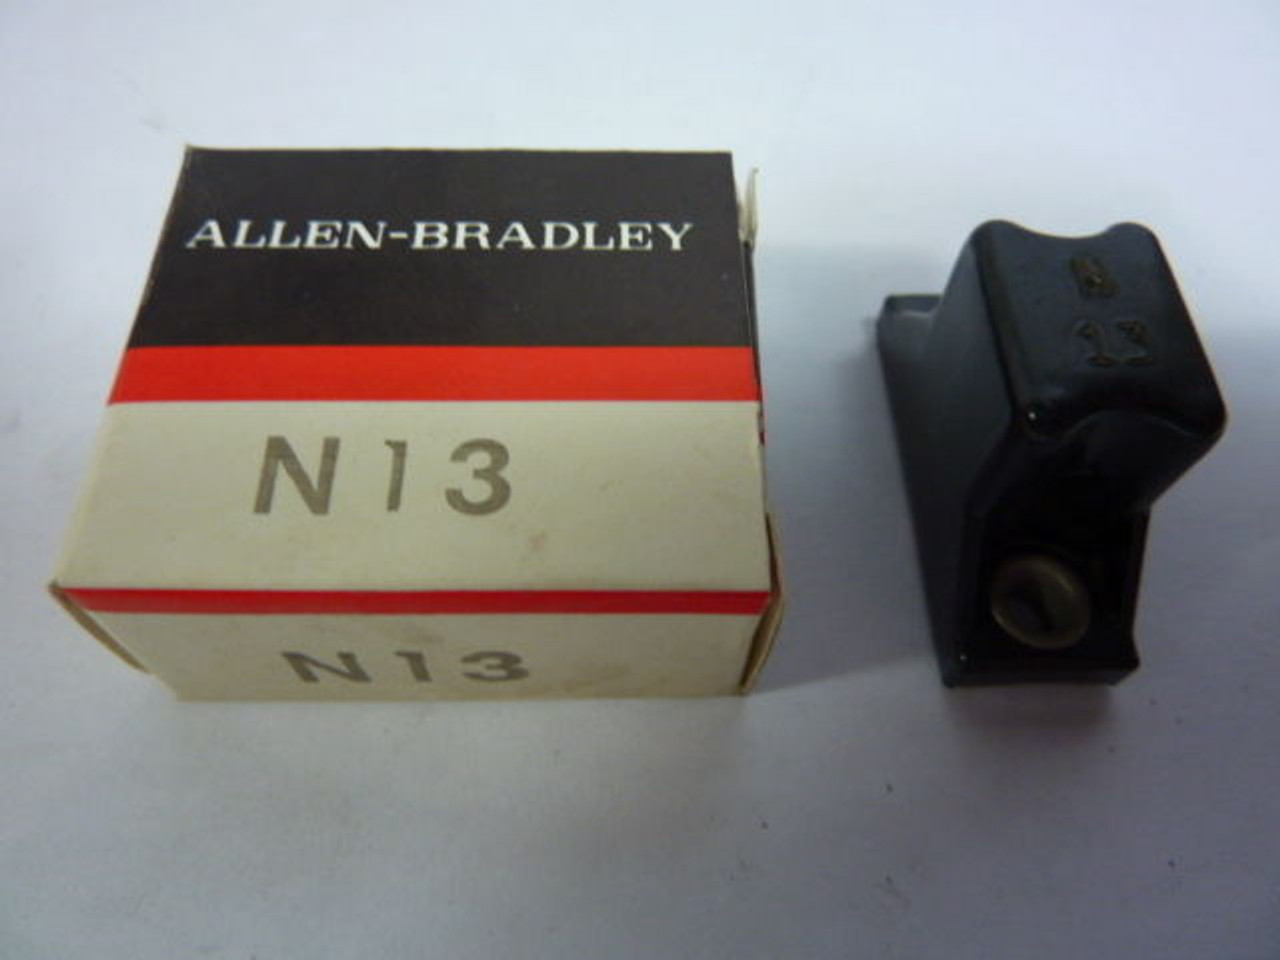 Allen-Bradley N13 Relay Overload Thermal Unit Heating Element Shelf Wear ! NEW !